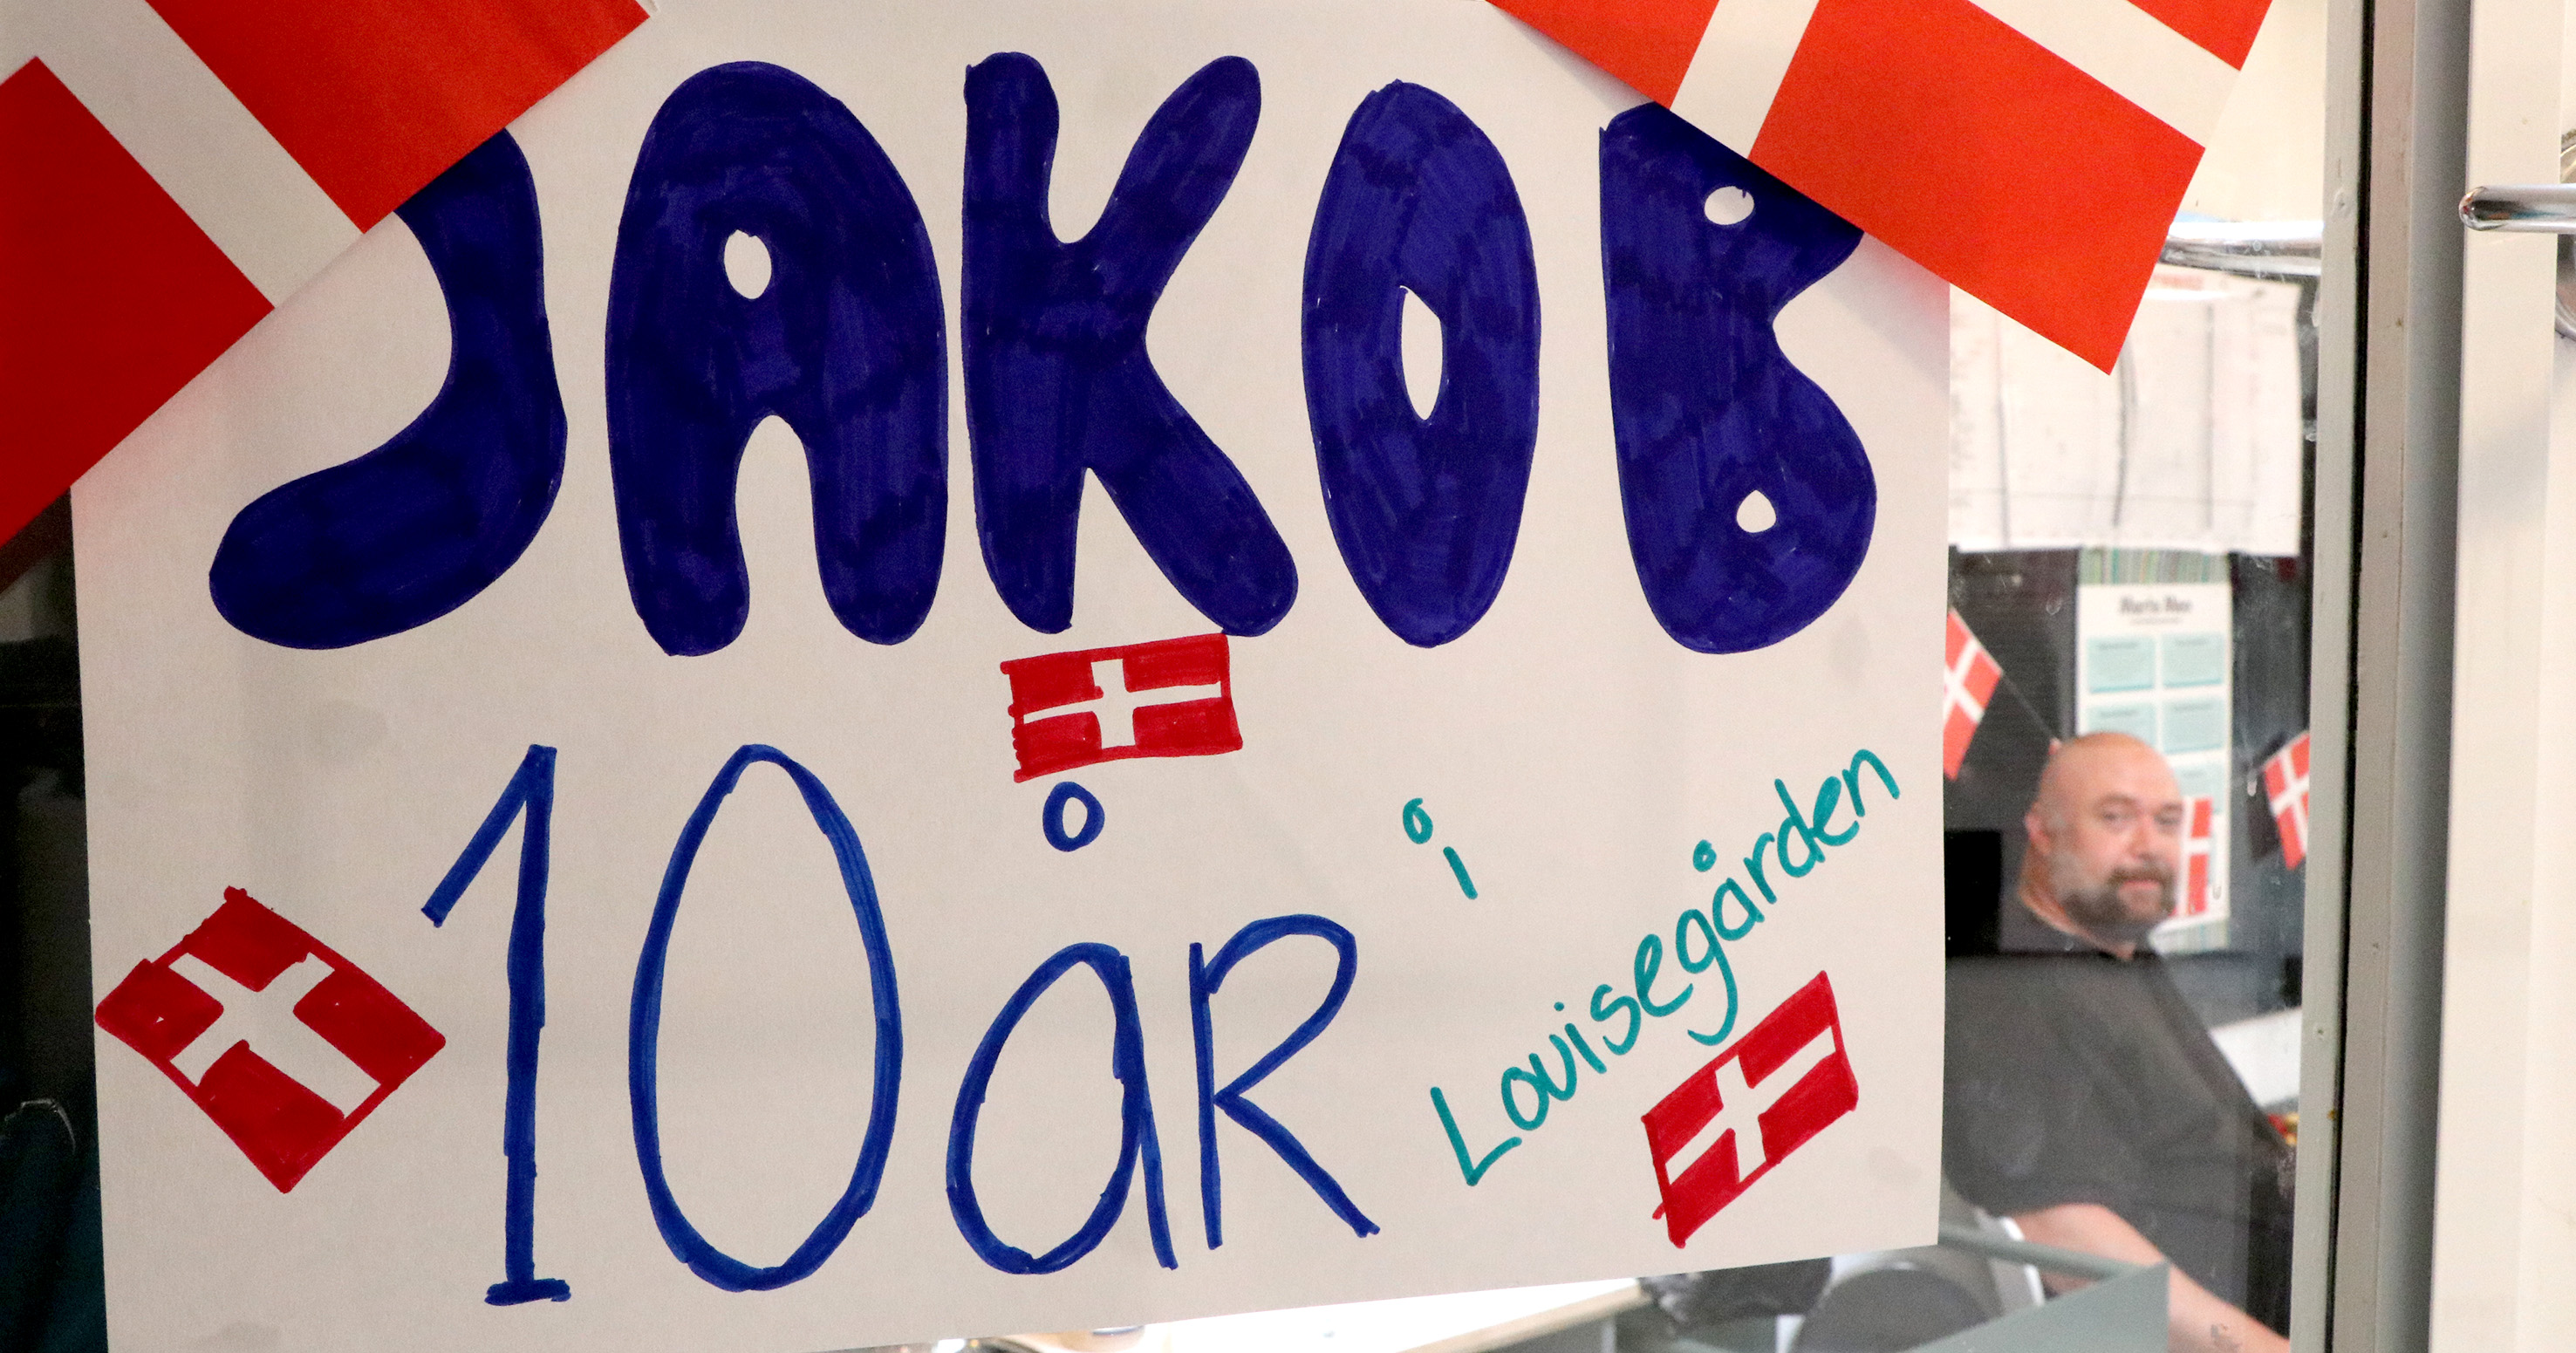 Billedet viser et håndtegnet skilt med teksten 'Jakob 10 år i Louisegården'.